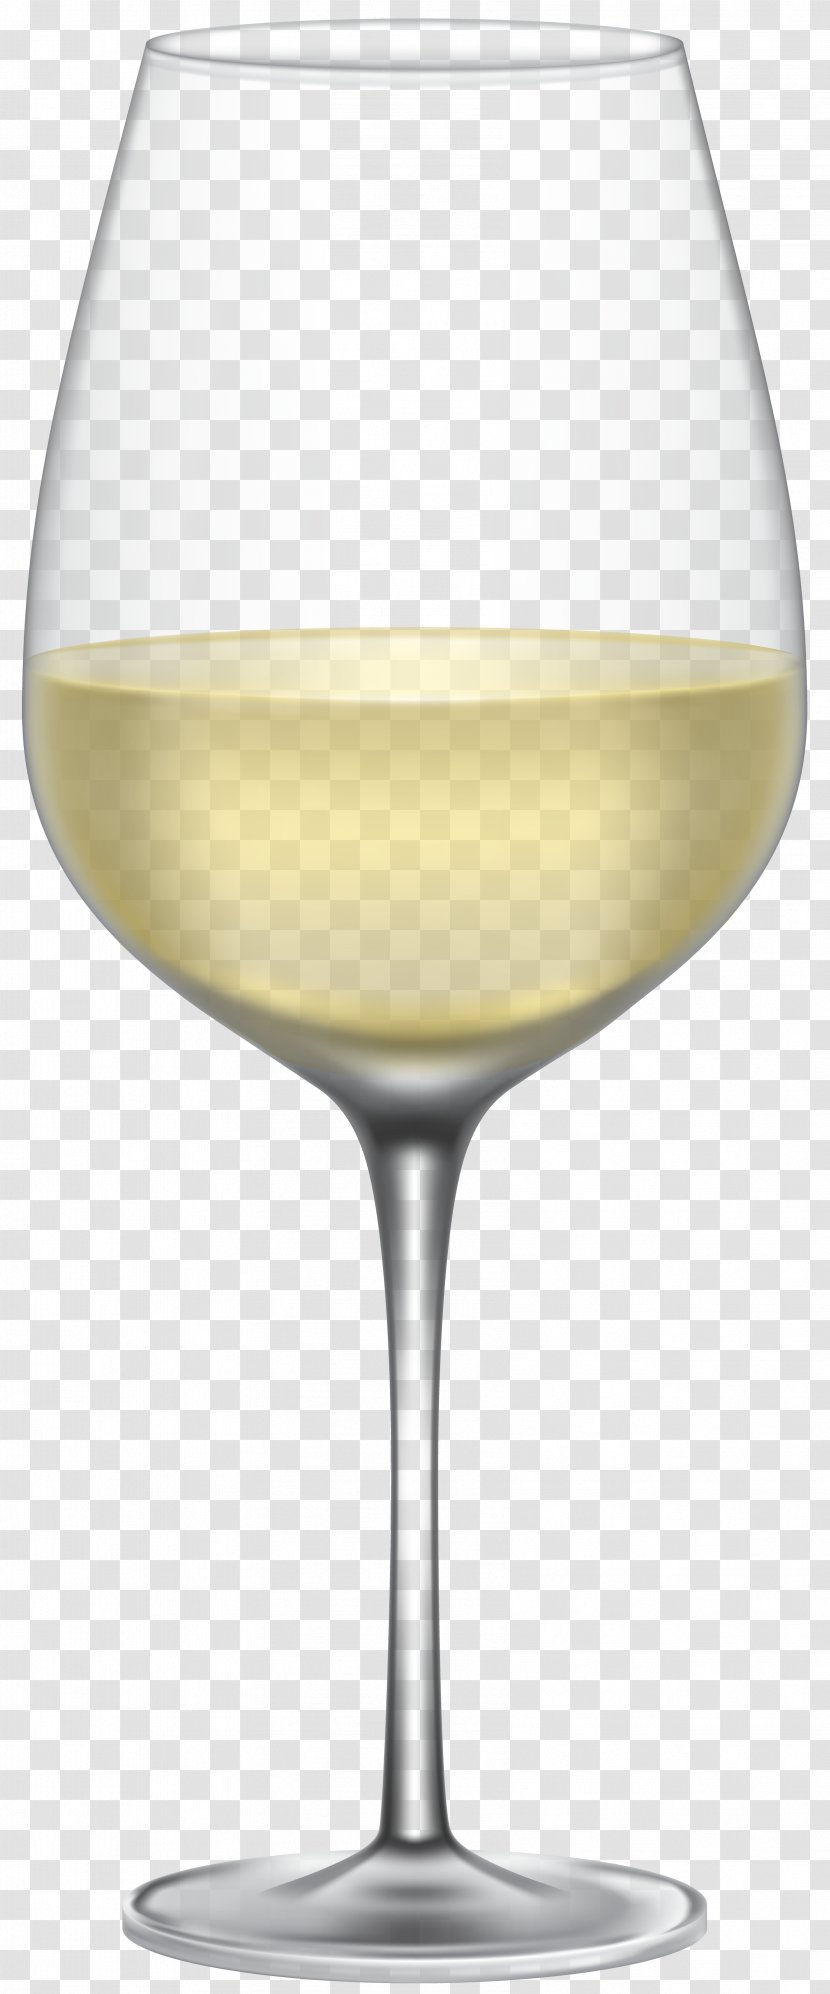 Red Wine White Cabernet Sauvignon Merlot - Product Design - Glass Of Transparent Clip Art Image Transparent PNG